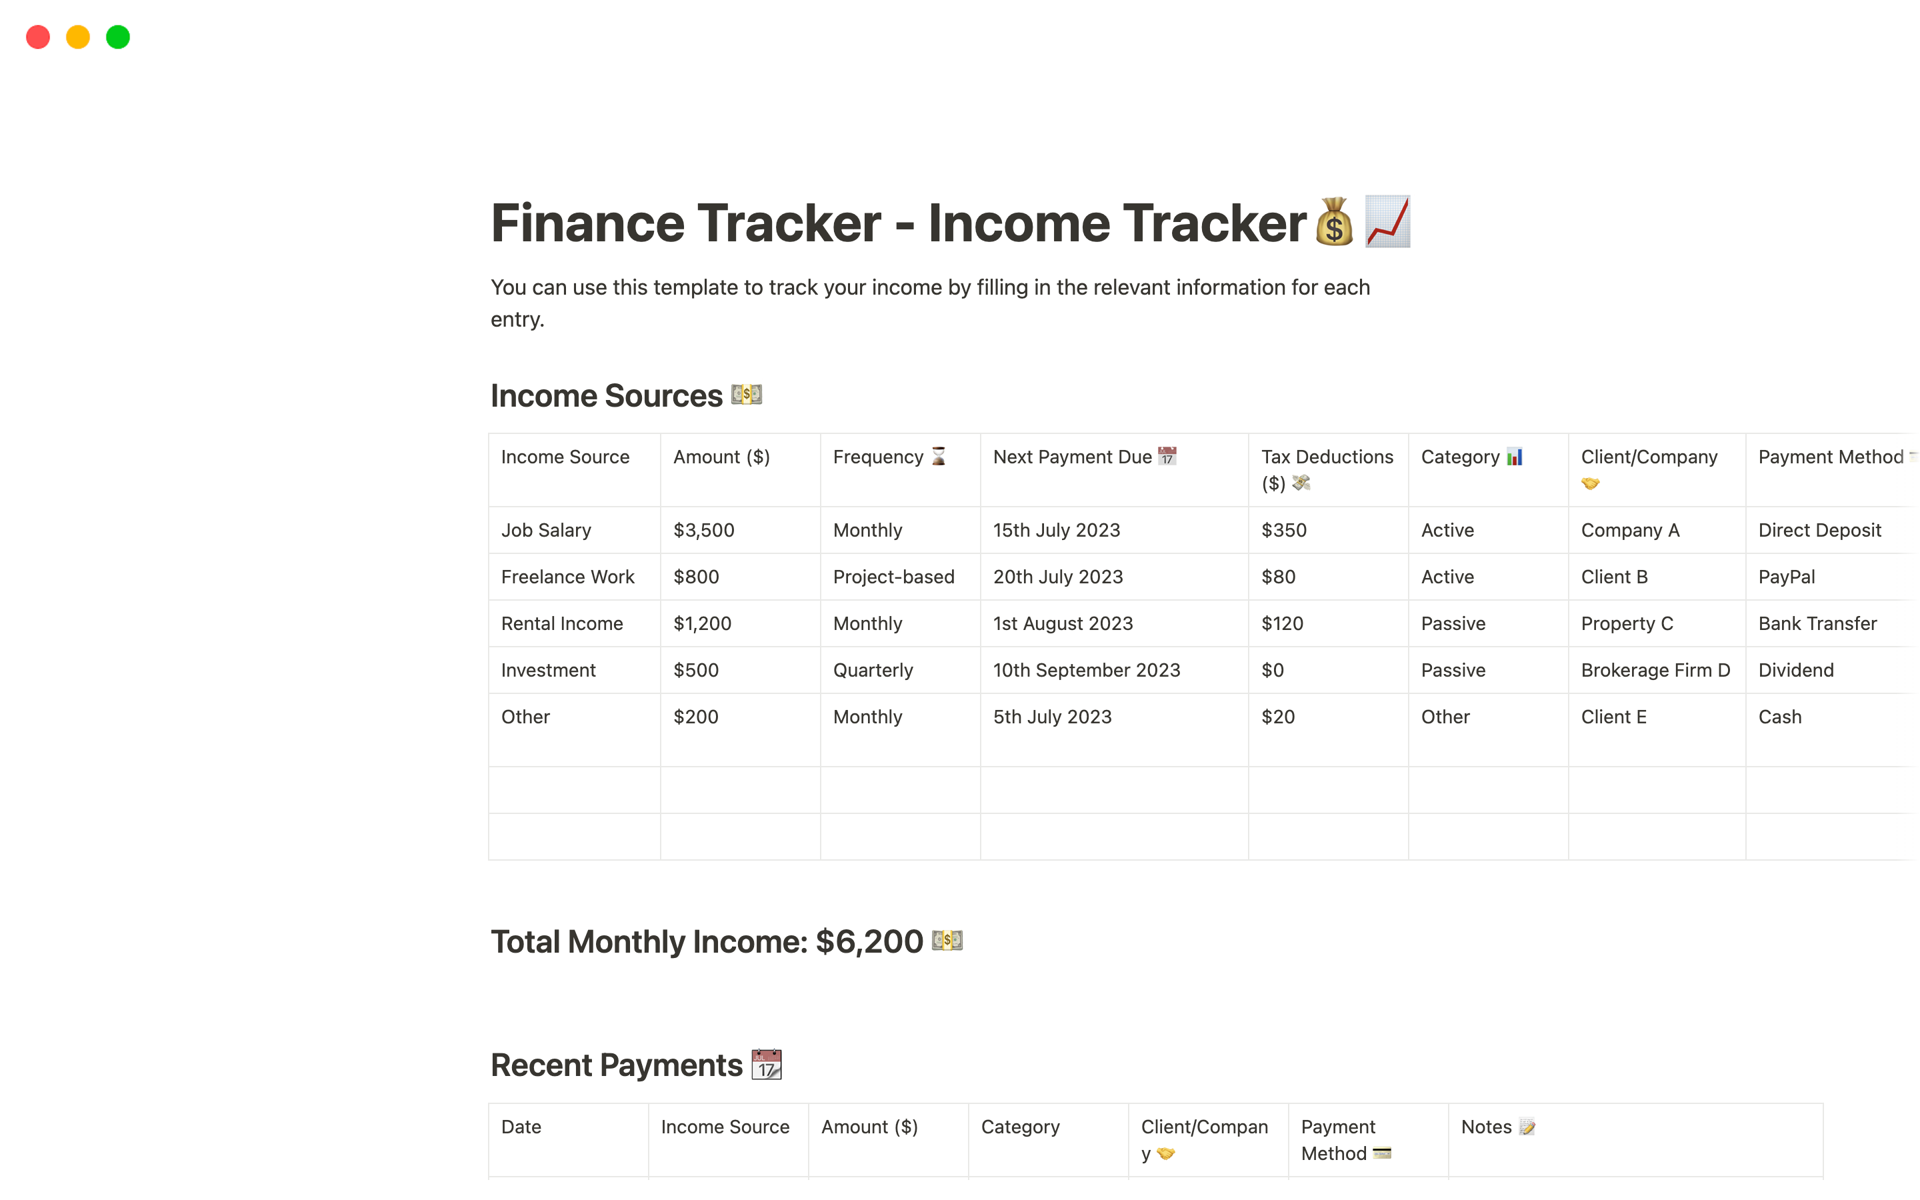 Aperçu du modèle de Finance Tracker - Income Tracker